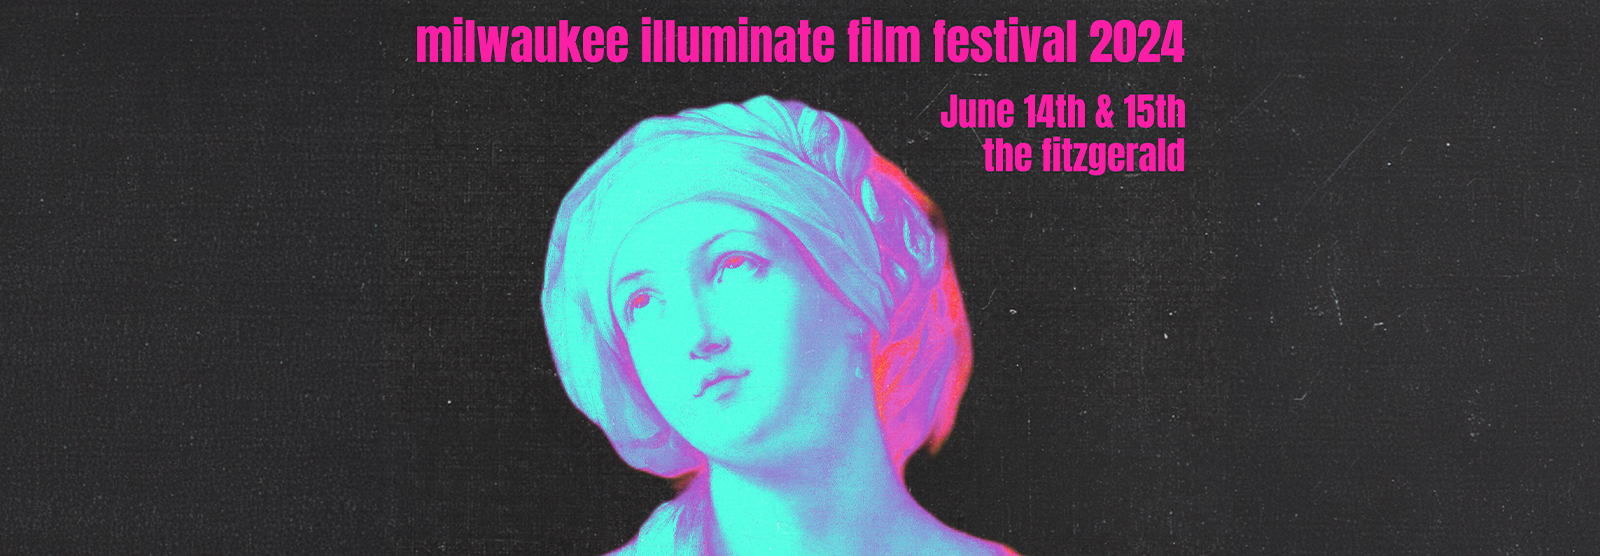 Milwaukee Illuminate Film Festival 2024